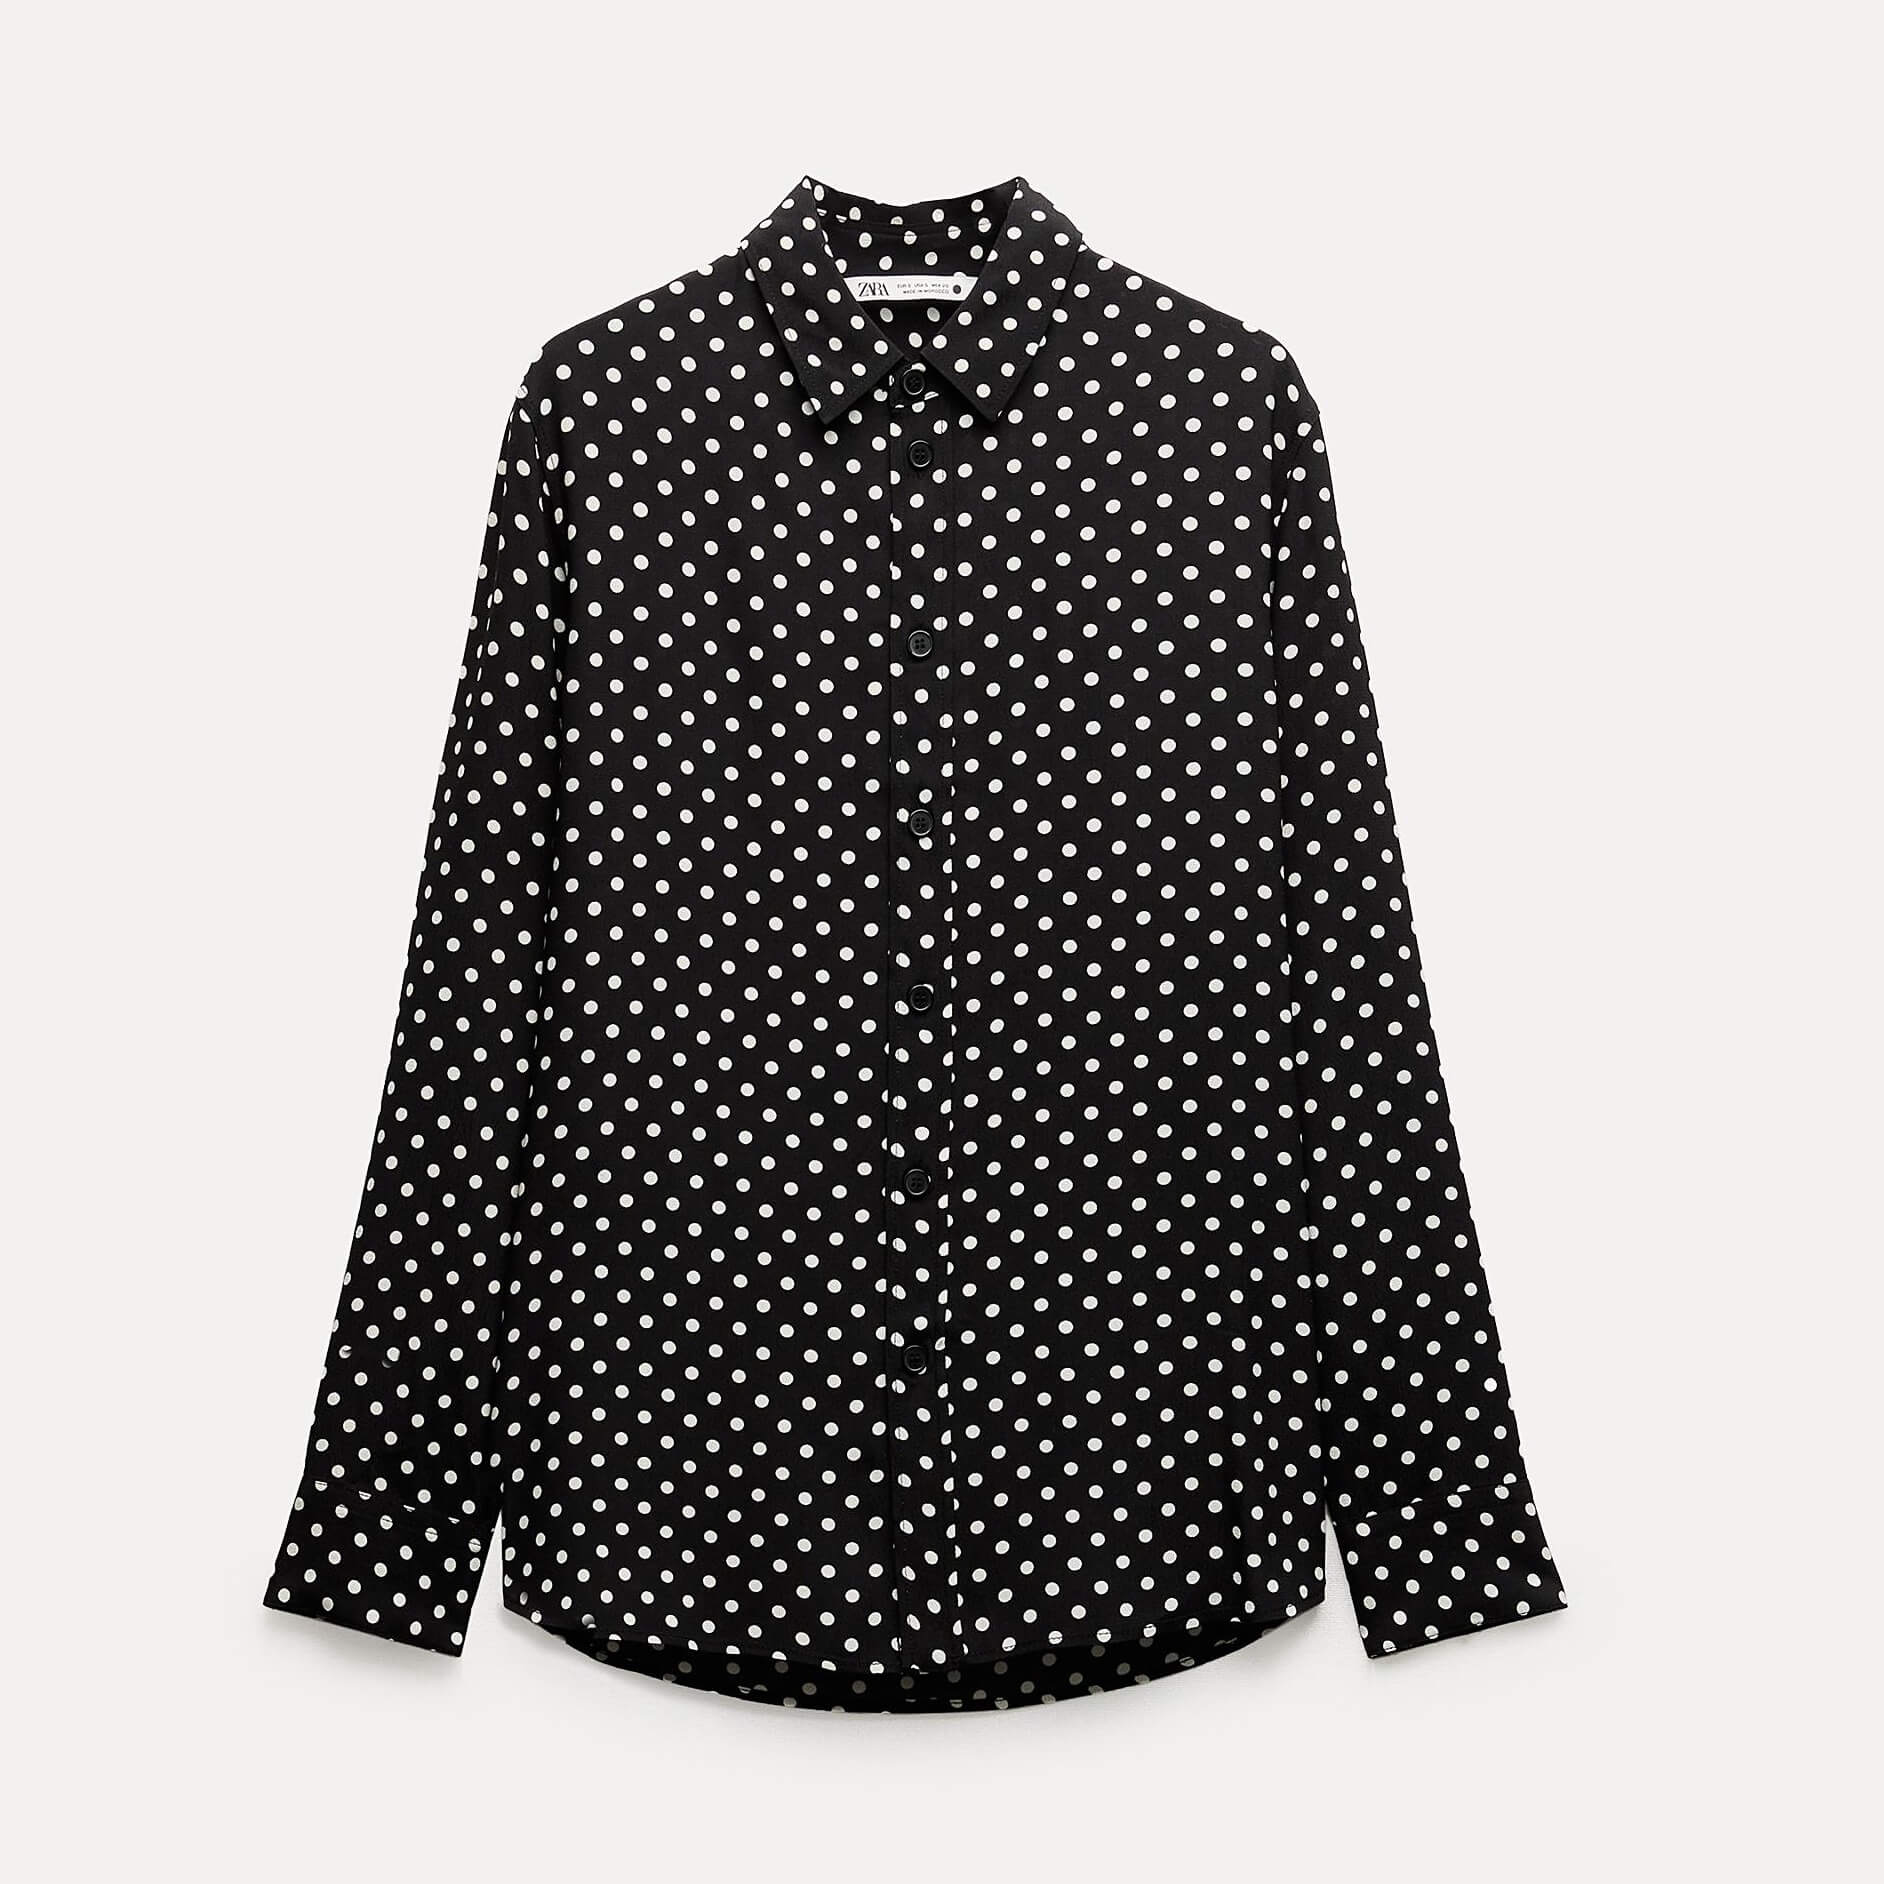 Рубашка Zara ZW Collection Polka Dot Print, черный/белый рубашка zara zw collection polka dot print черный белый